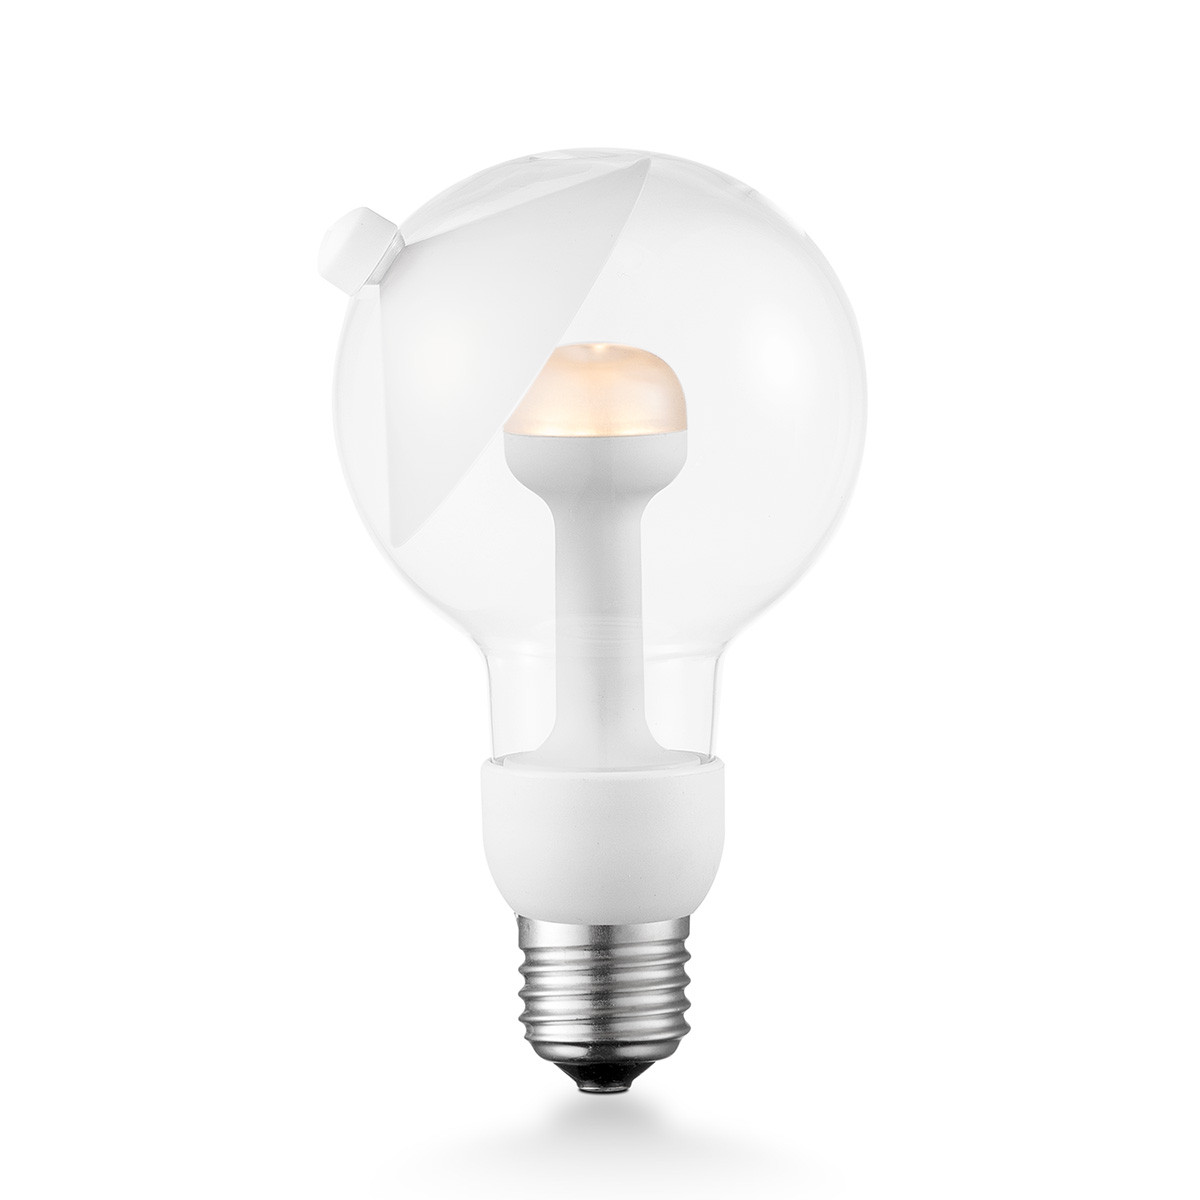 LED Lichtbron Move Me G80, Cone, 8/8/13.7cm, Wit, Design LED lamp met verstelbare diffuser via magneet, 3W 220lm 2700K, warm wit licht, geschikt voor E27 fitting